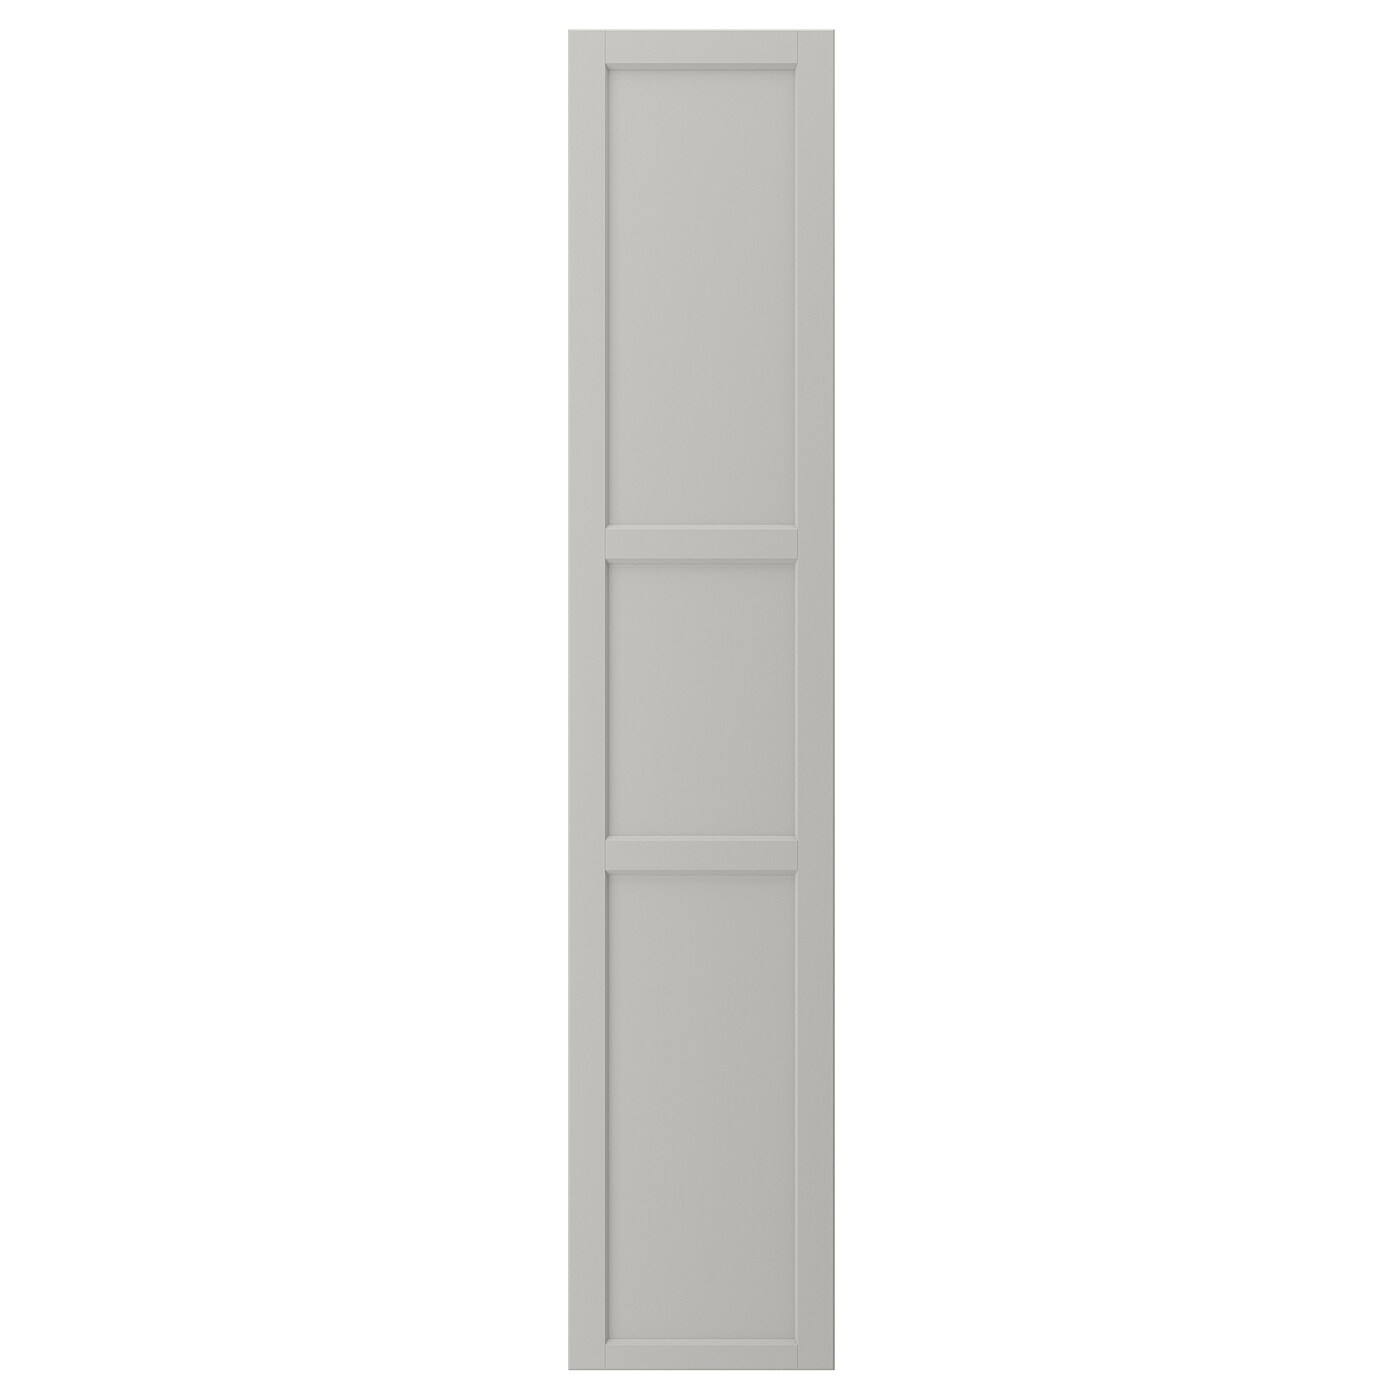 Фасад - IKEA LERHYTTAN, 200х40 см, светло-серый, ЛЕРХЮТТАН ИКЕА